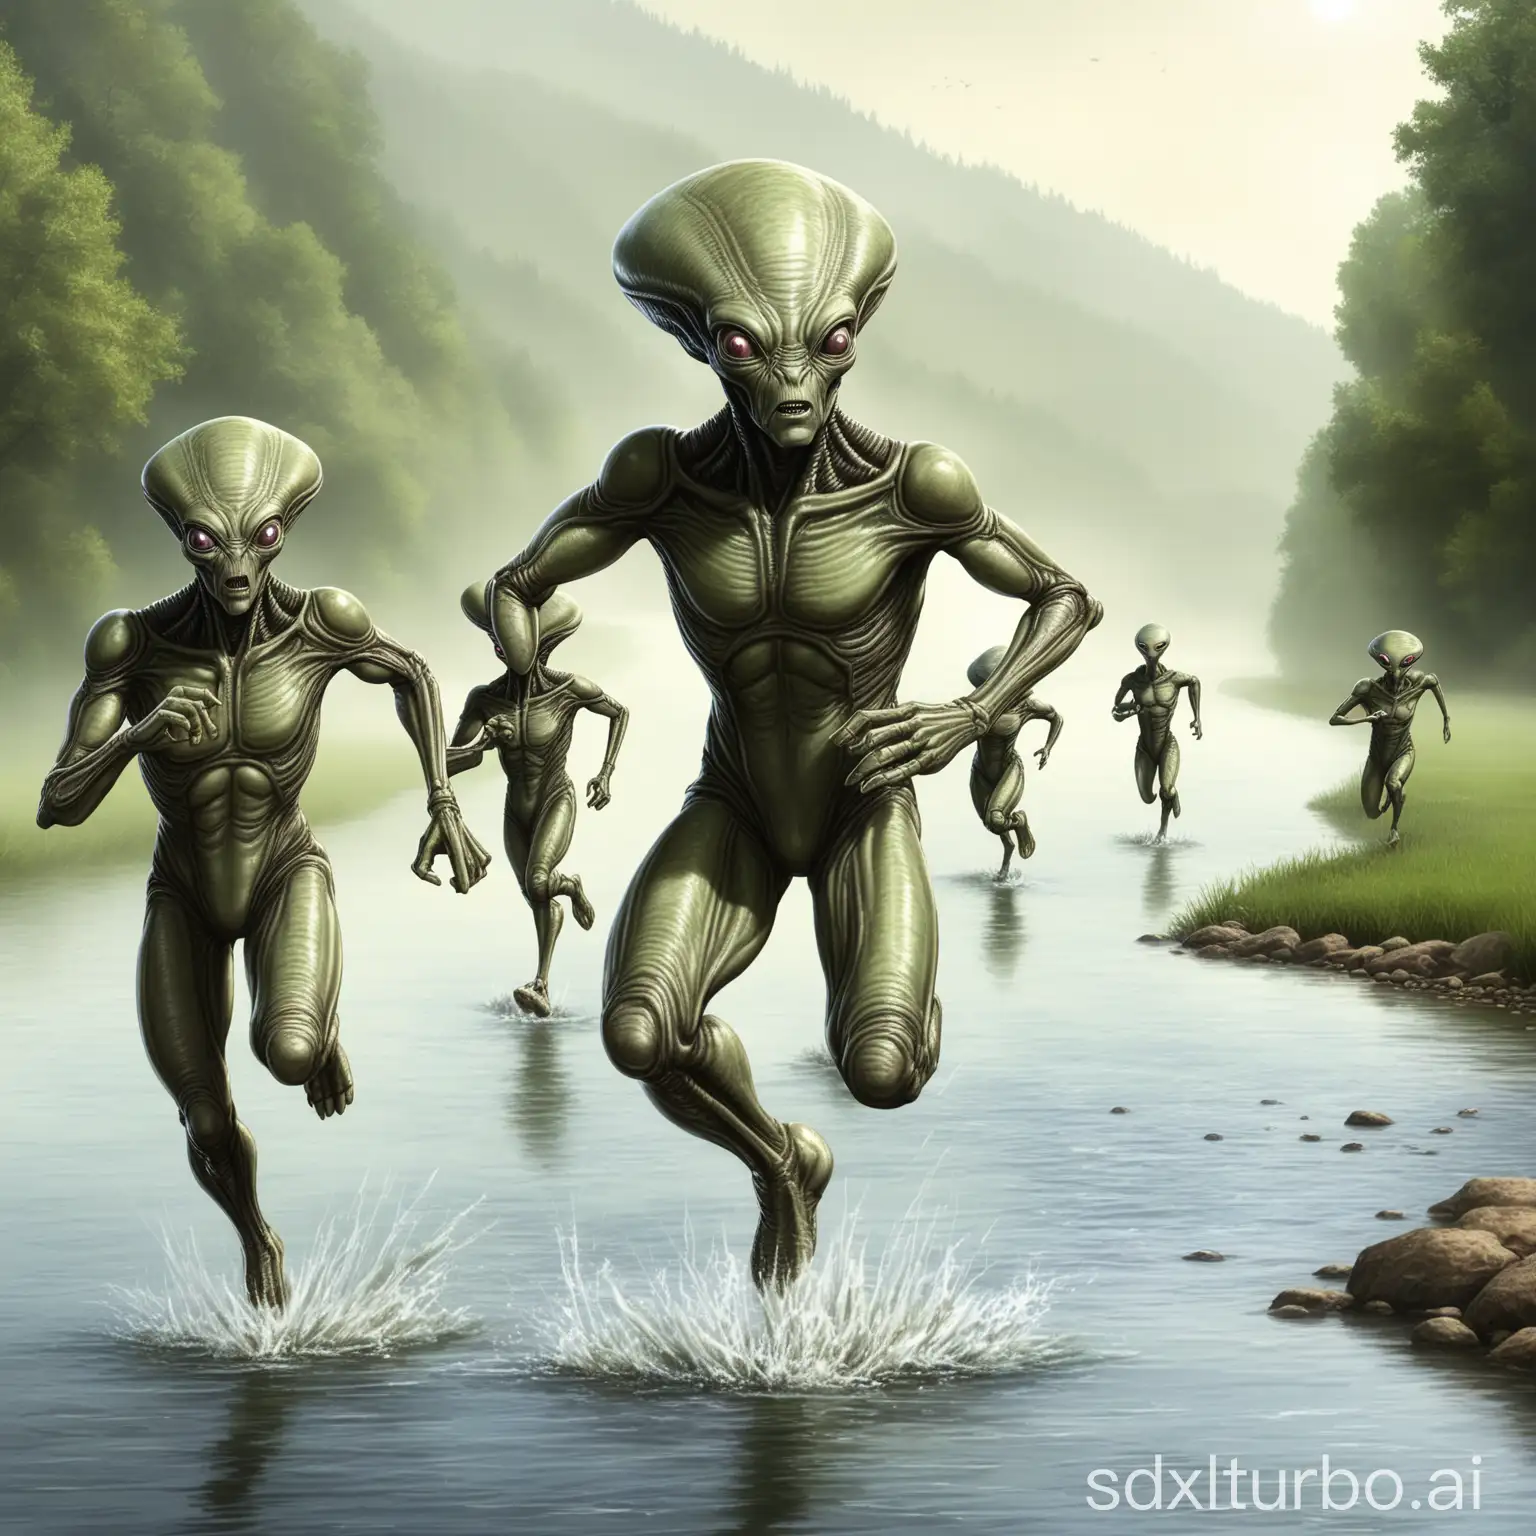 Aliens-Jogging-Along-the-Riverside